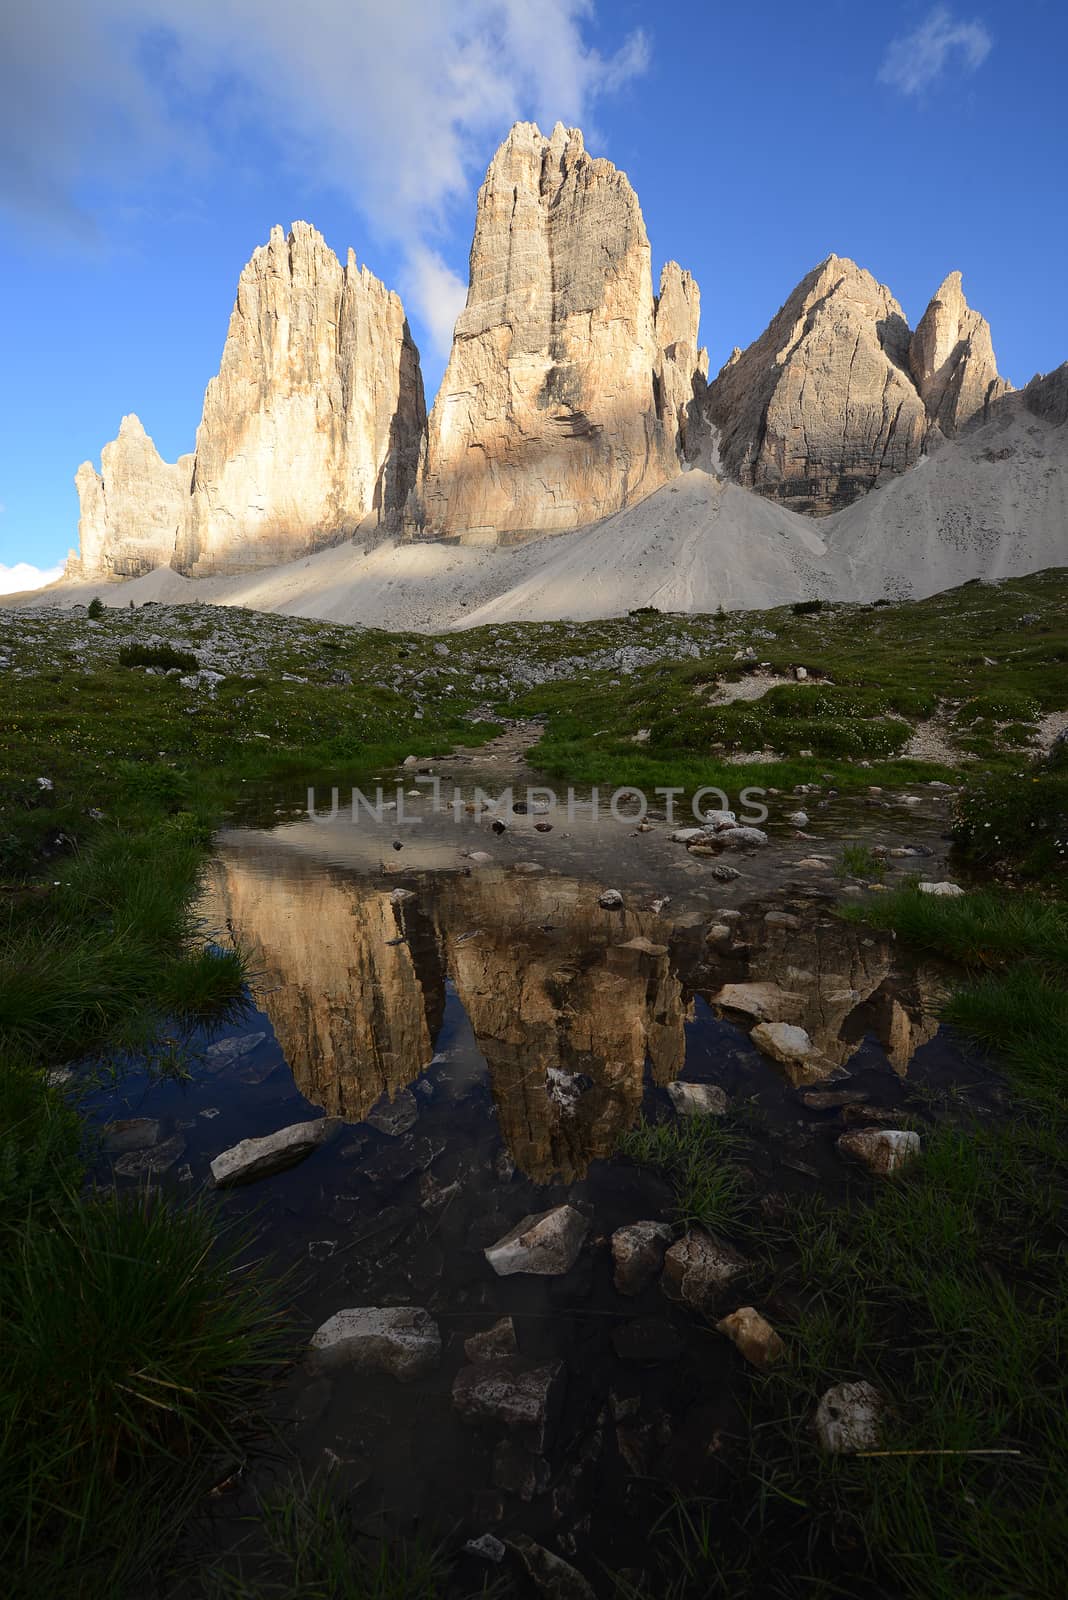 Dolomite mountain in Italy by porbital